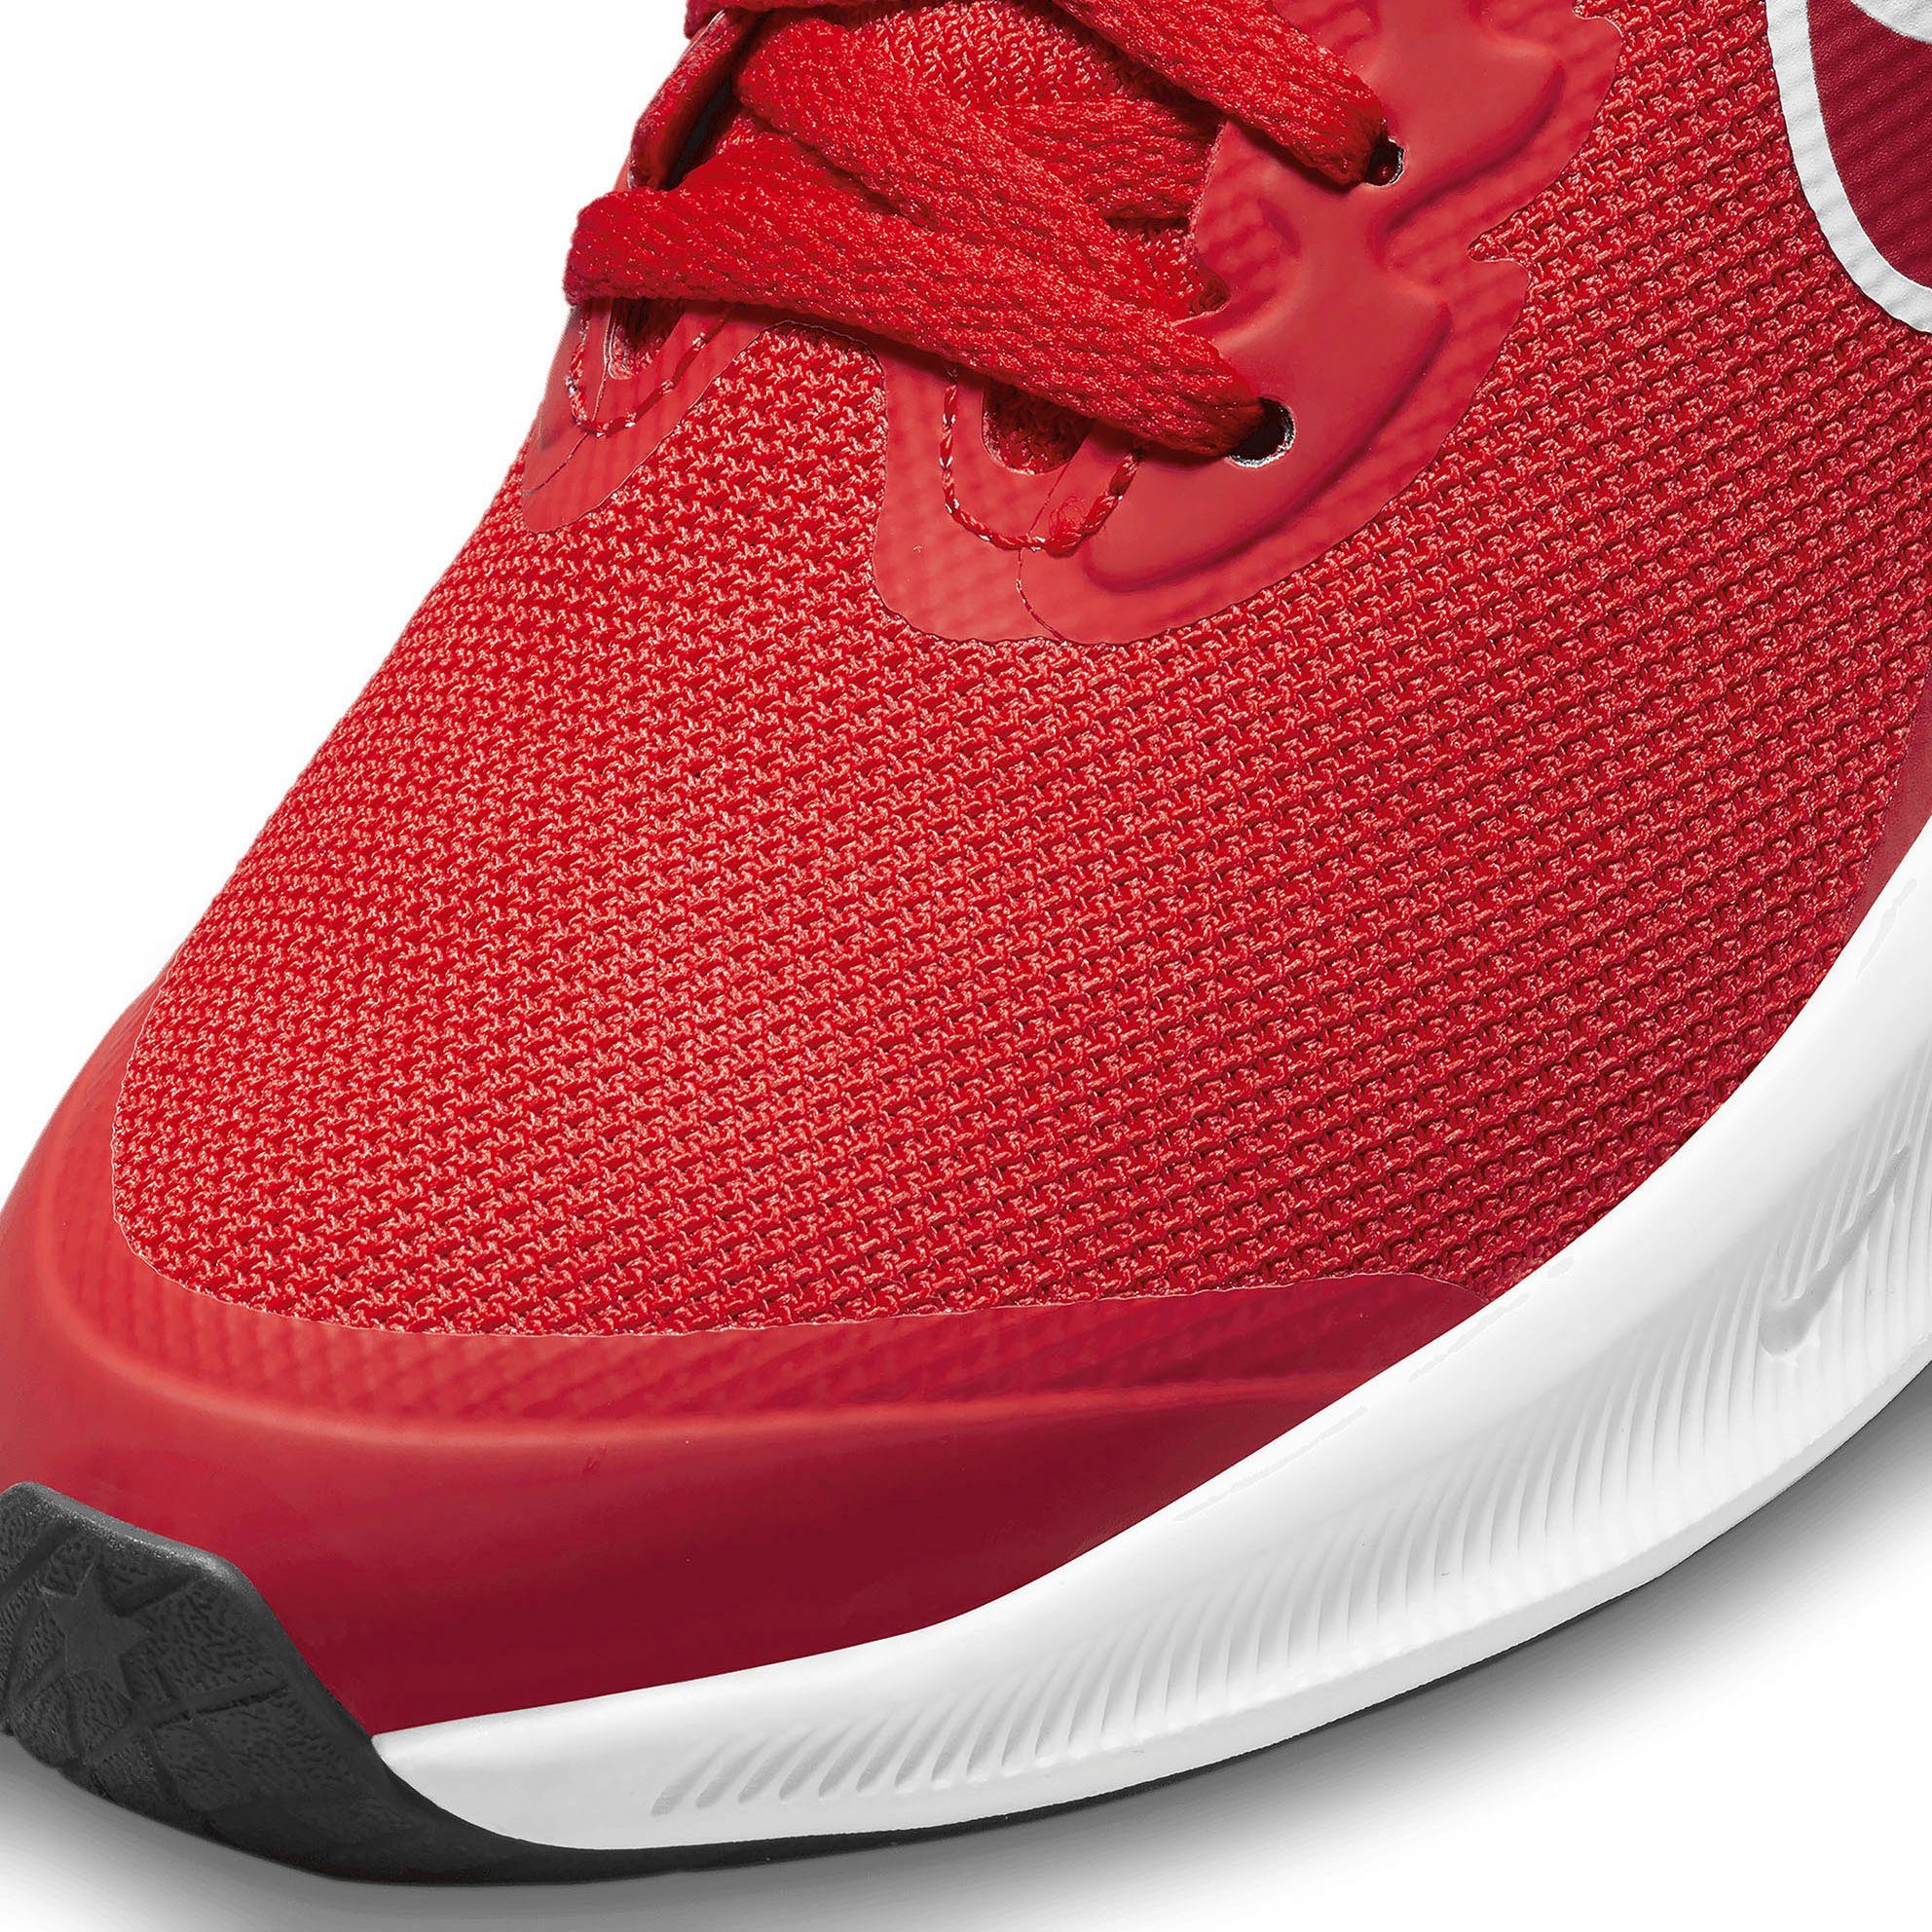 UNIVERSITY-RED-UNIVERSITY-RED-SMOKE-GREY 3 Laufschuh (GS) STAR Nike RUNNER